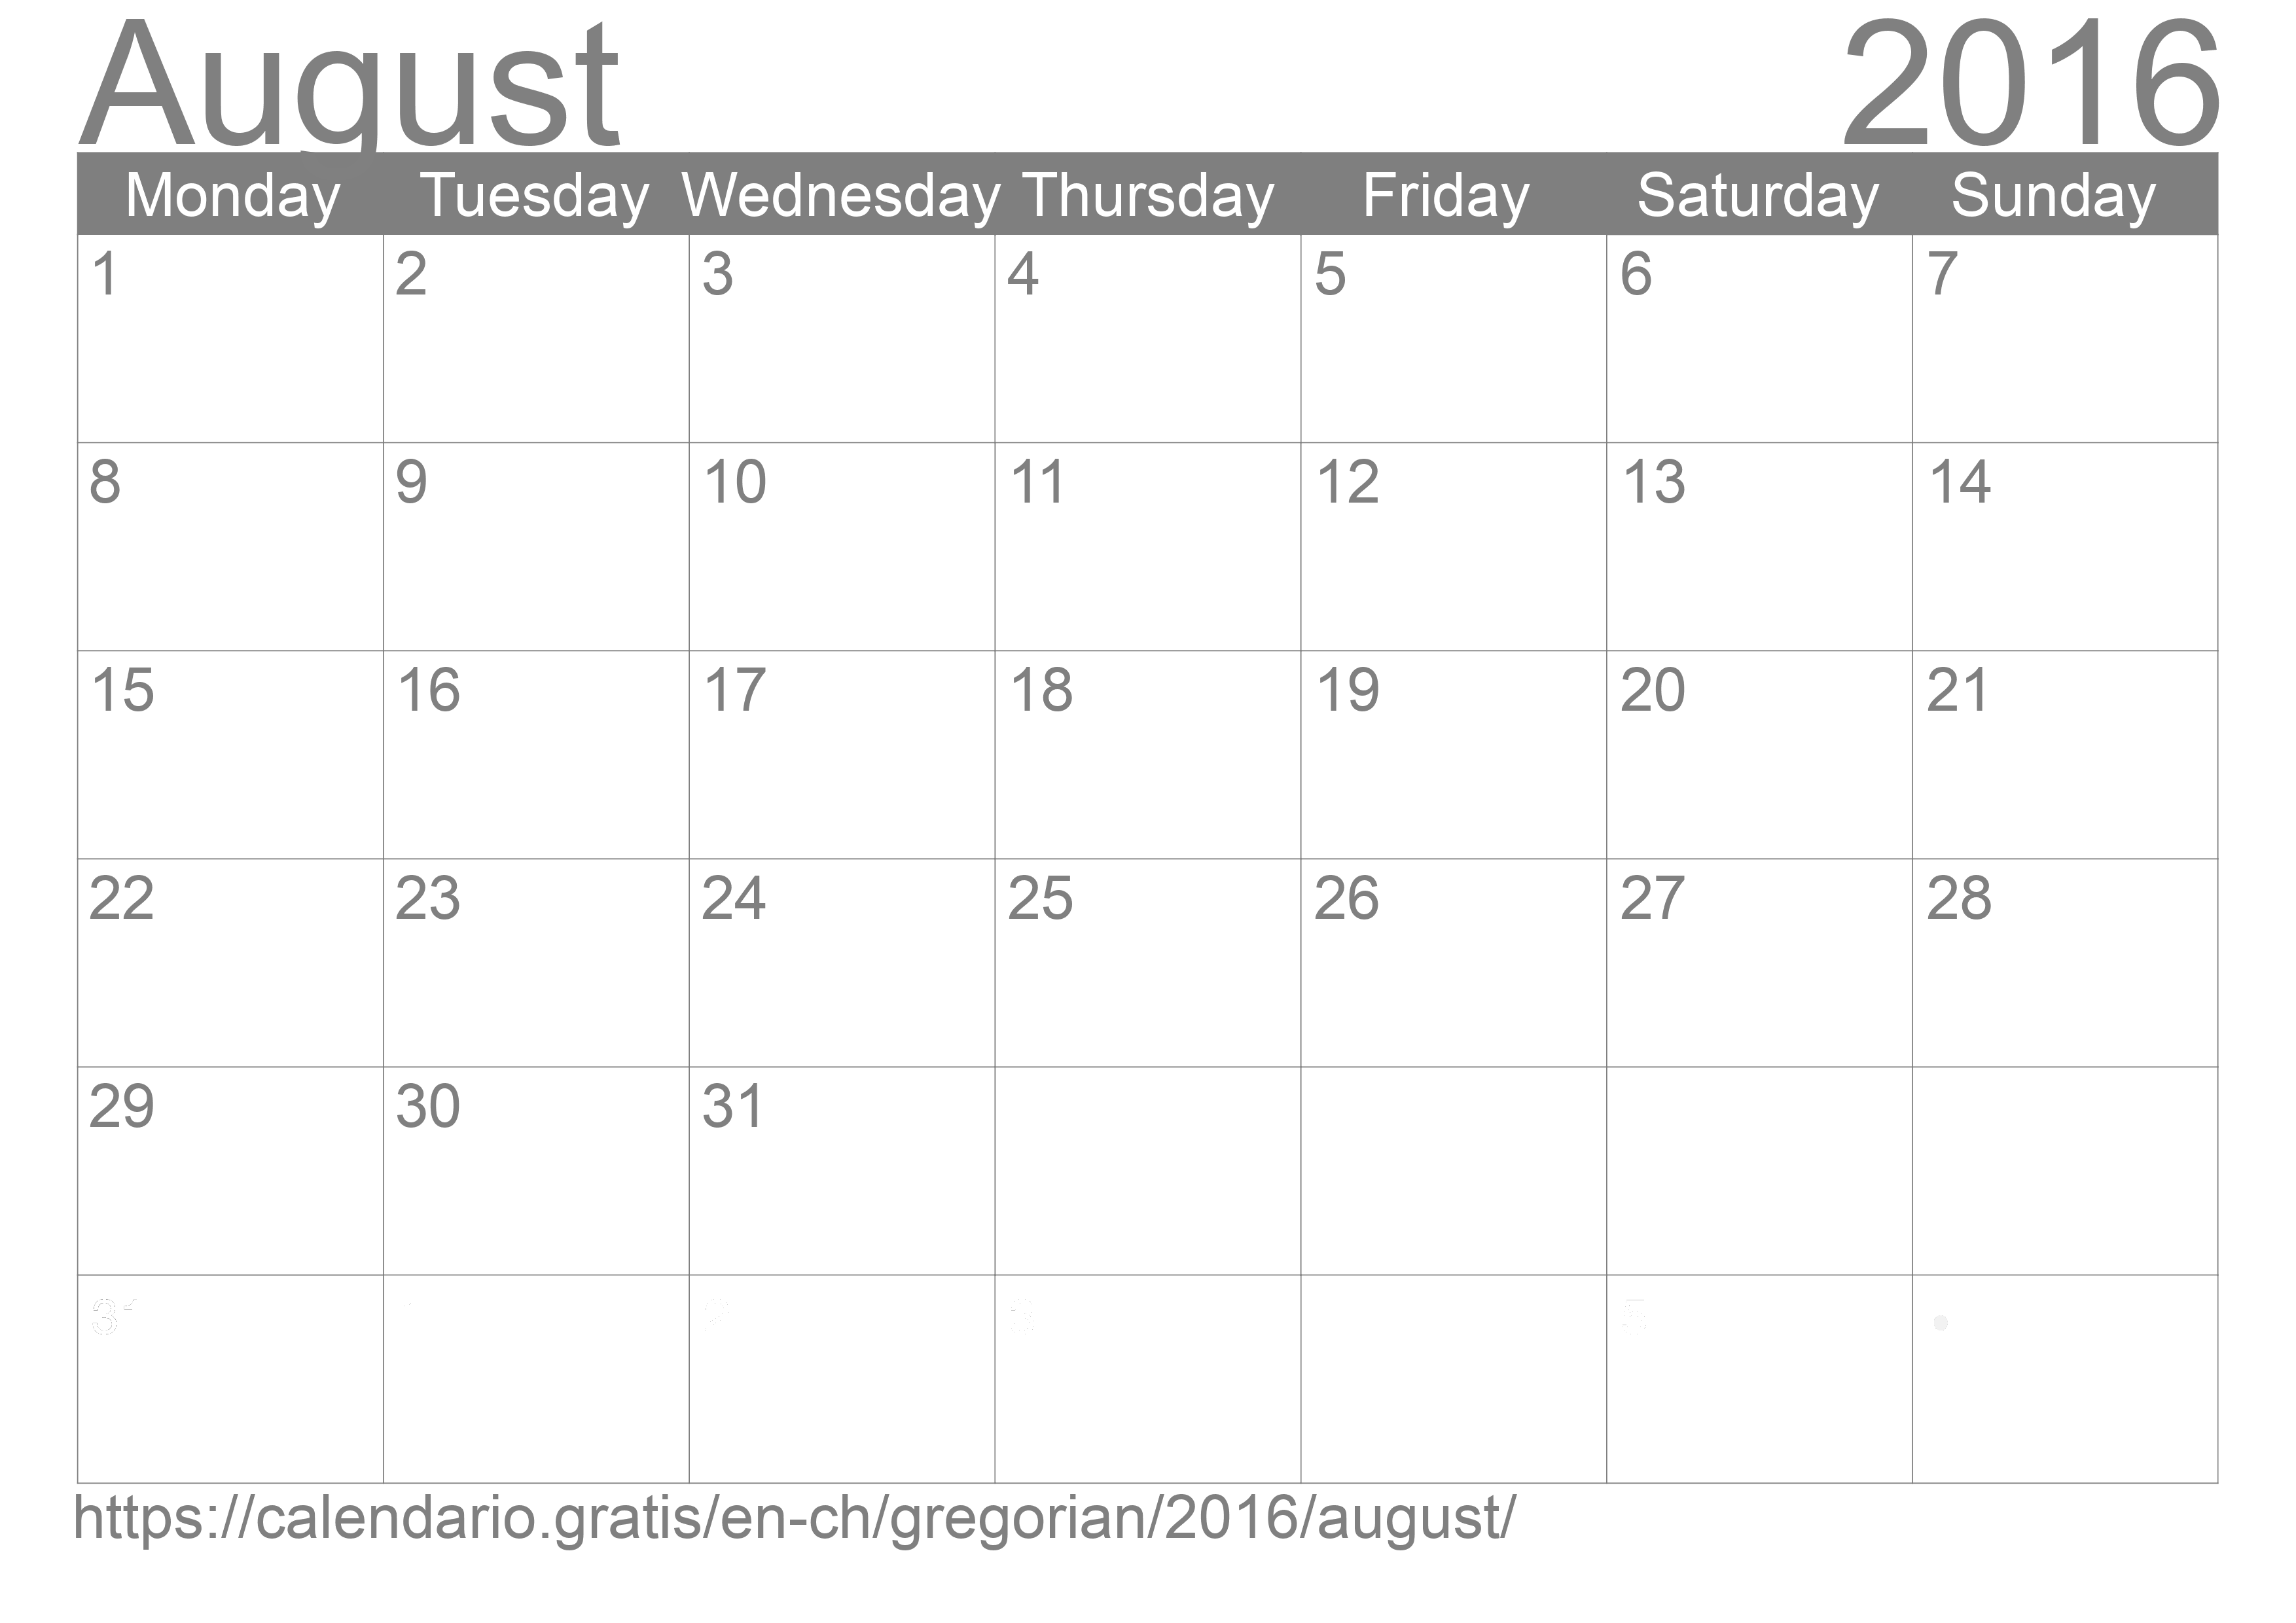 Calendar August 2016 to print